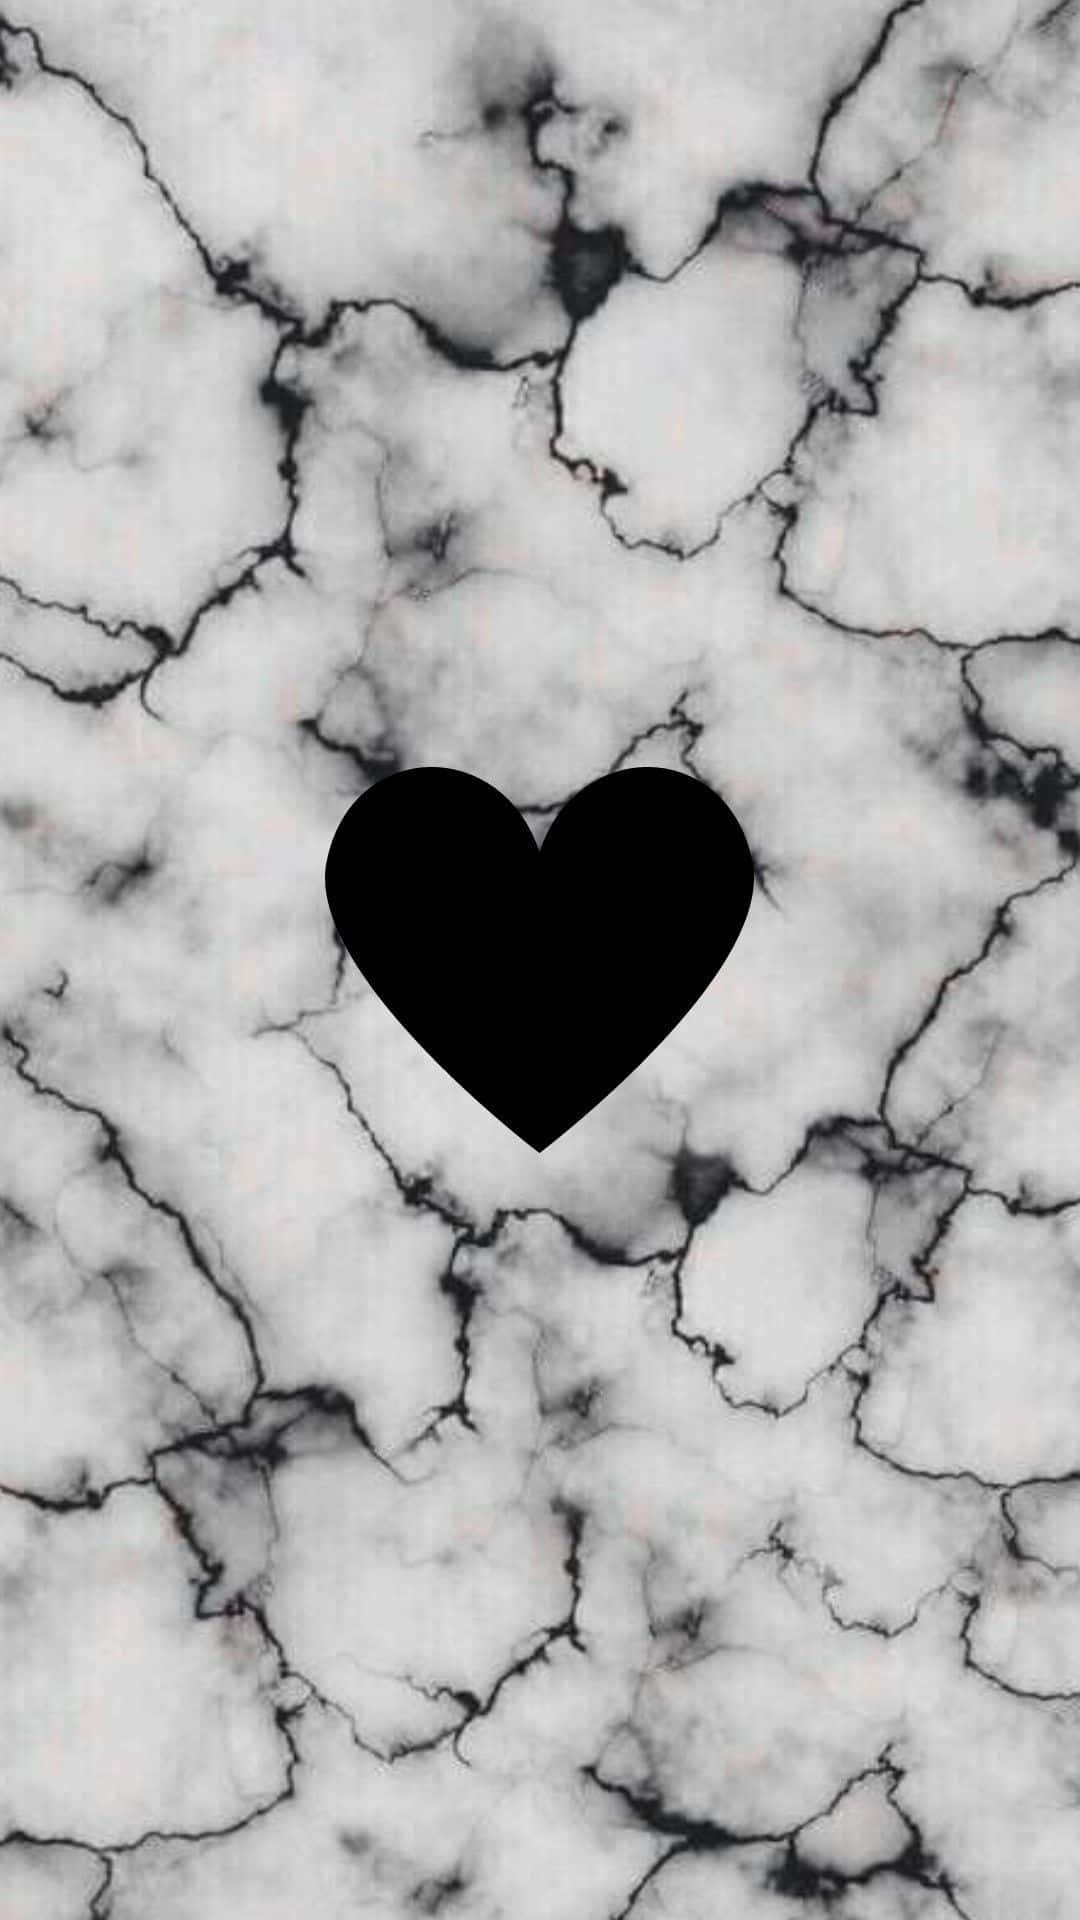 A beautiful black heart amidst the darkness Wallpaper